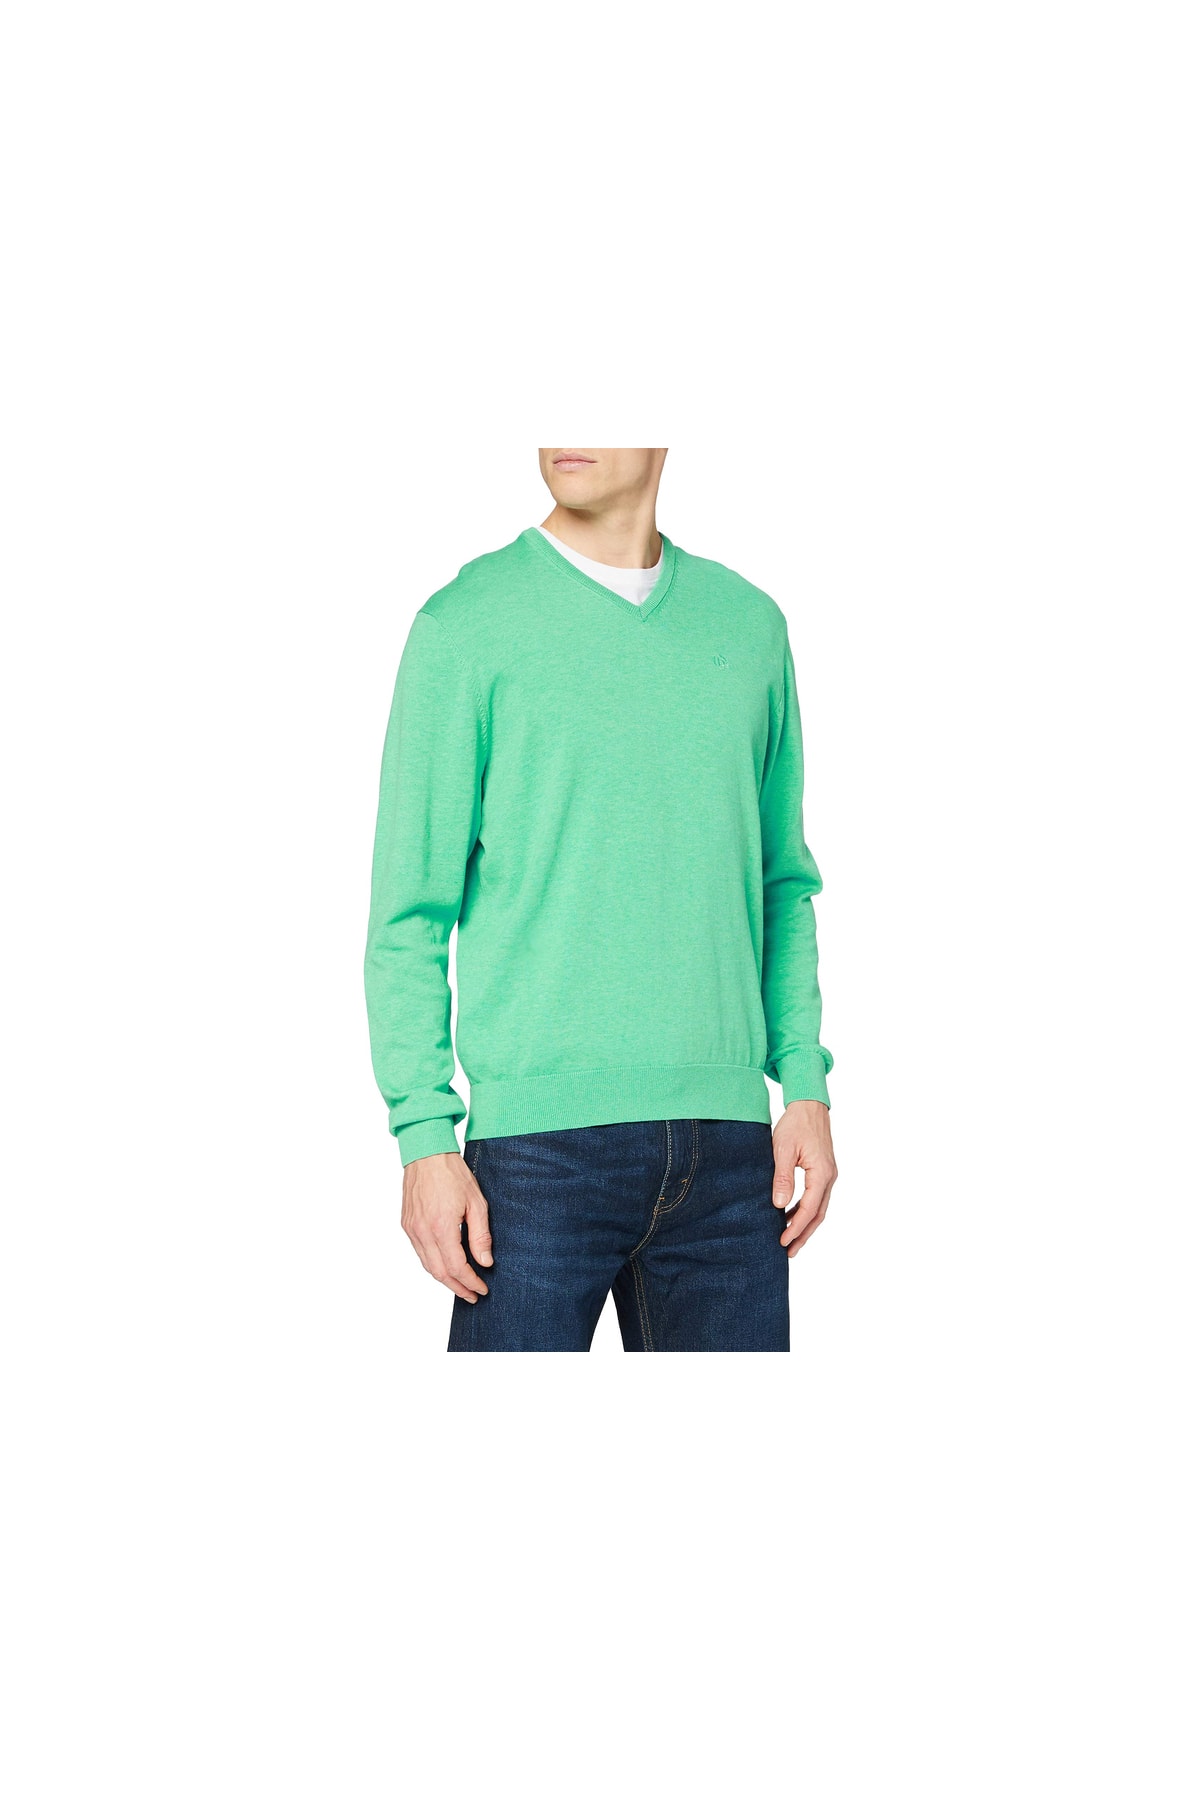 BUGATTI Pullover Grün Regular Fit Fast ausverkauft